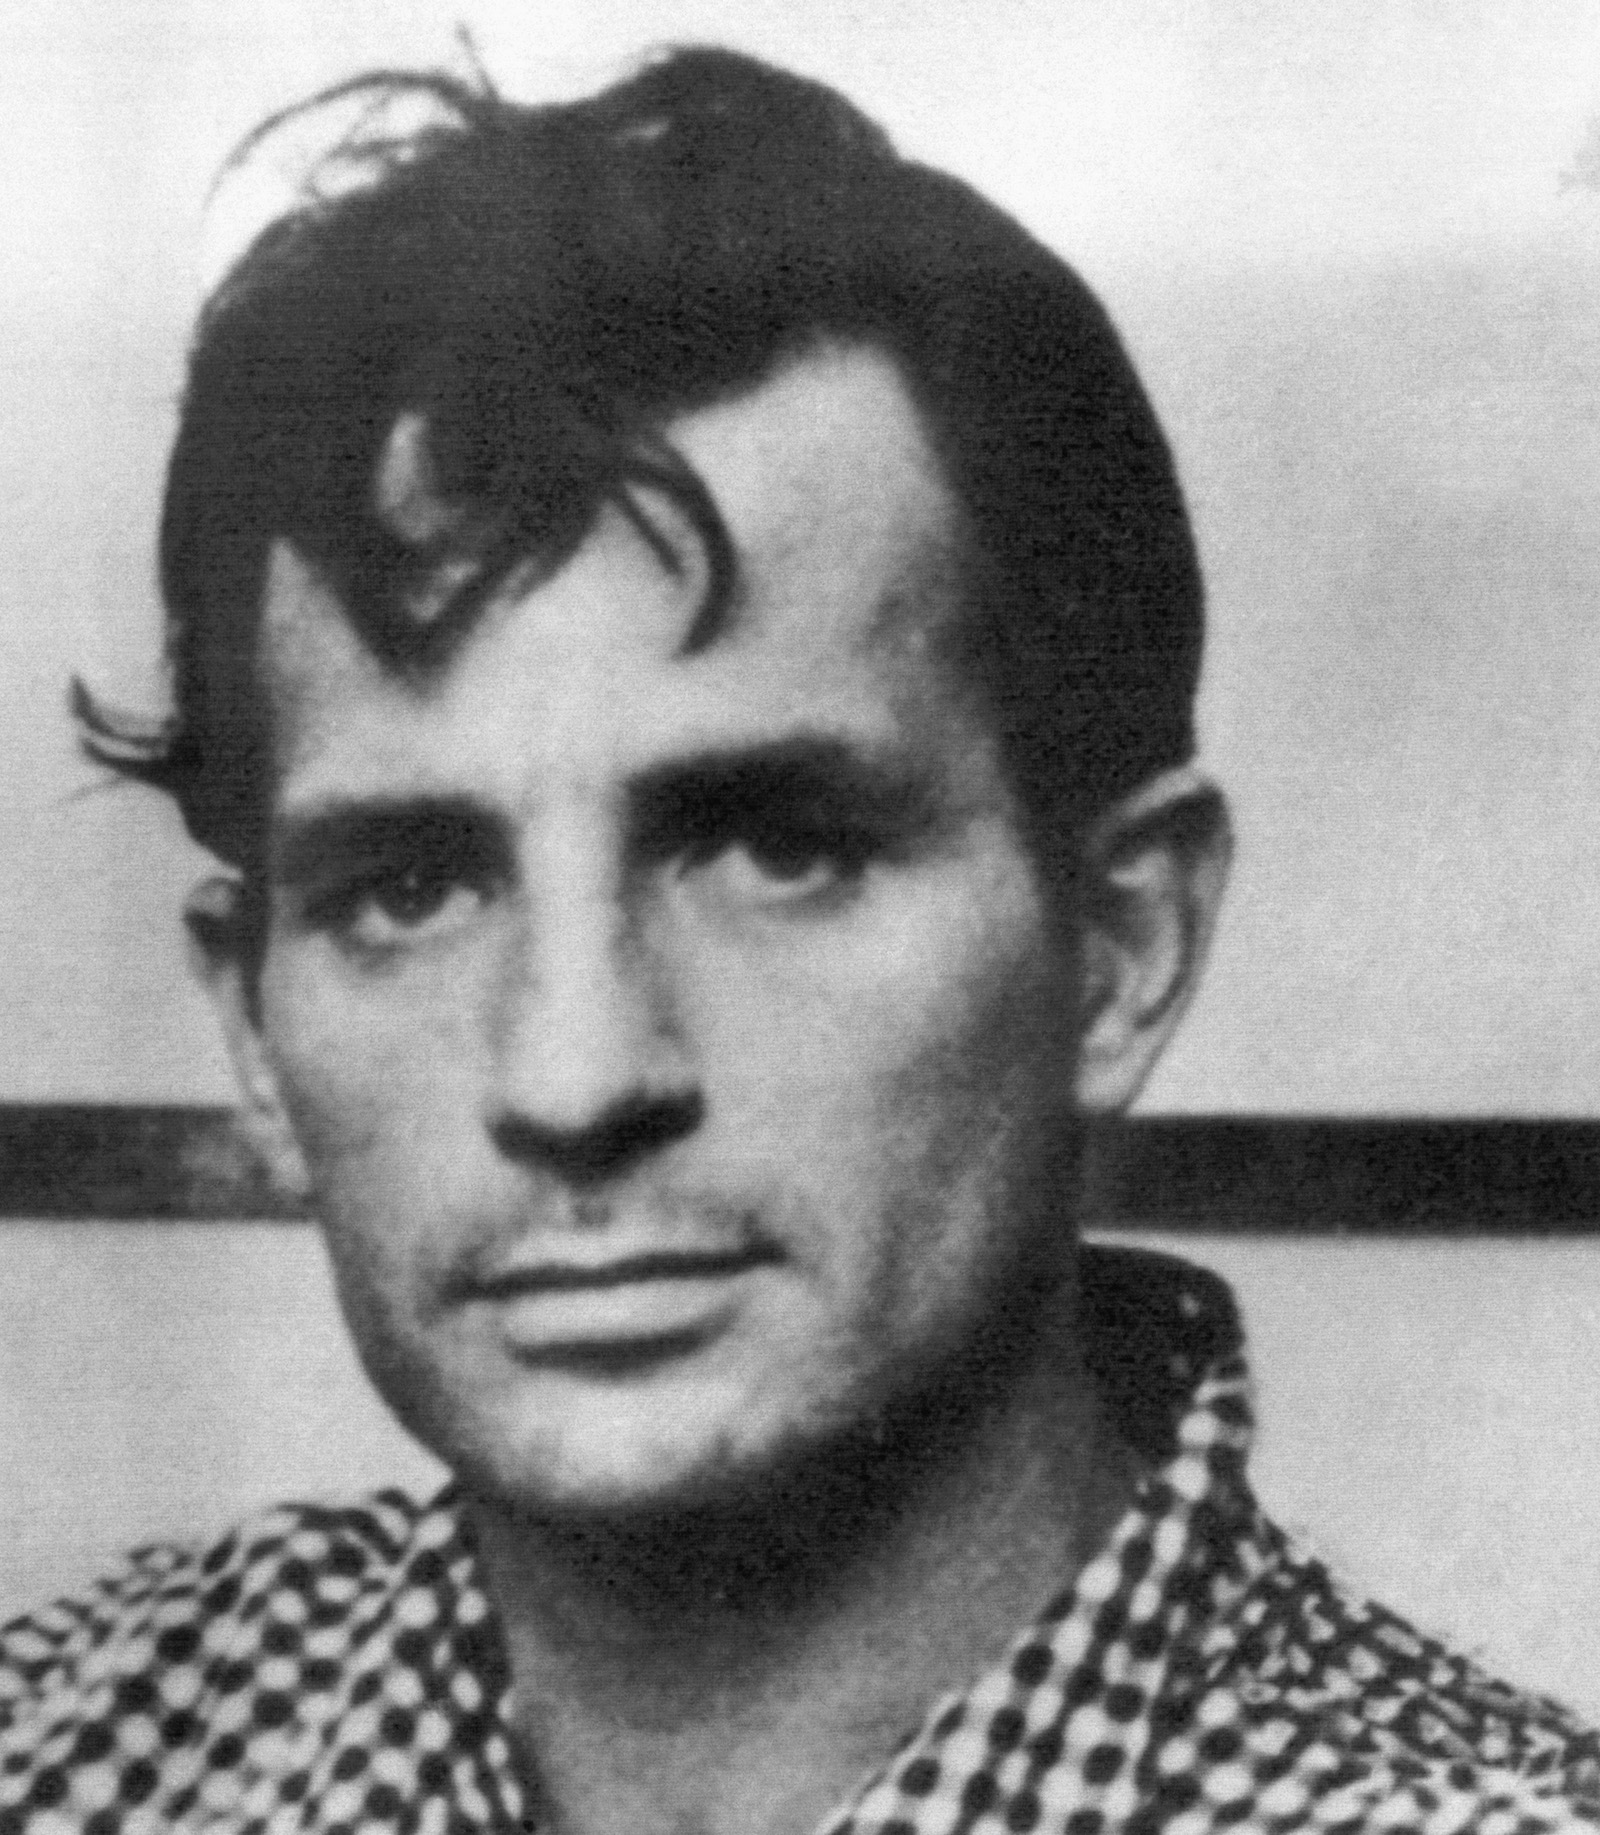 Jack Kerouac, 1956